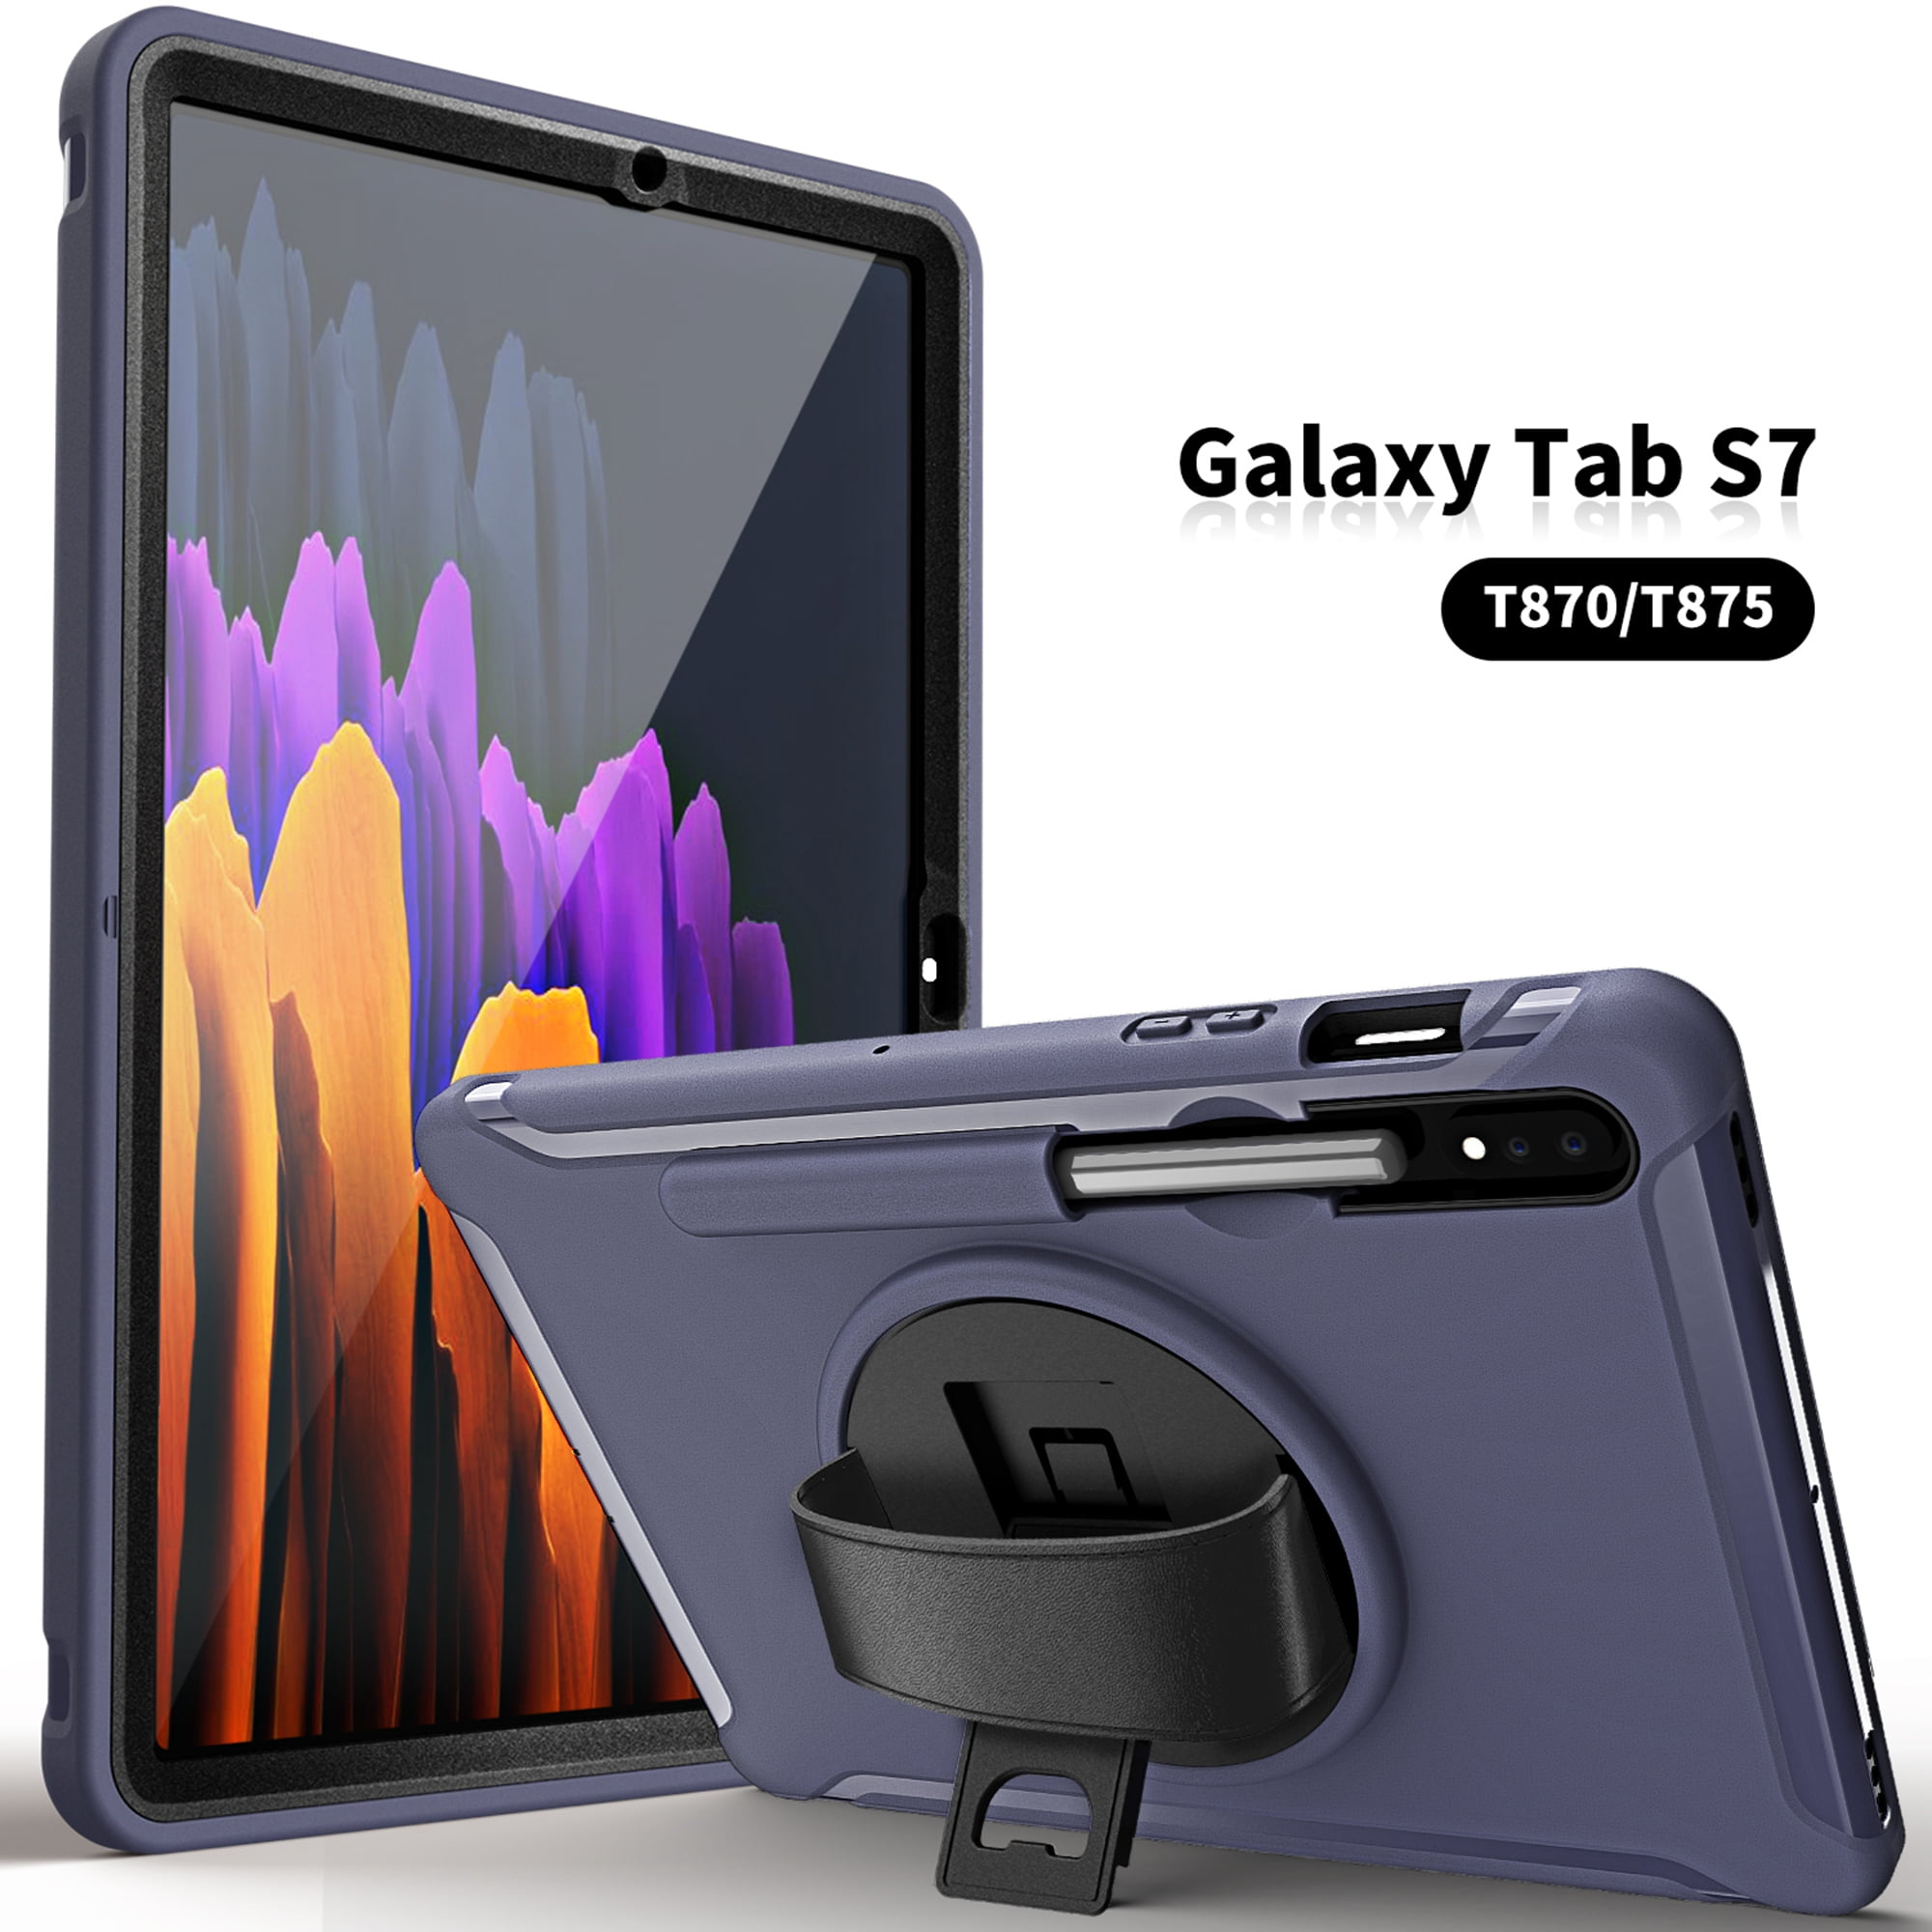 Dteck Galaxy Tab S7 Tablet 2020 Case, Heavy Duty 360 Rotating Kickstand Rugged Hybrid Shockproof